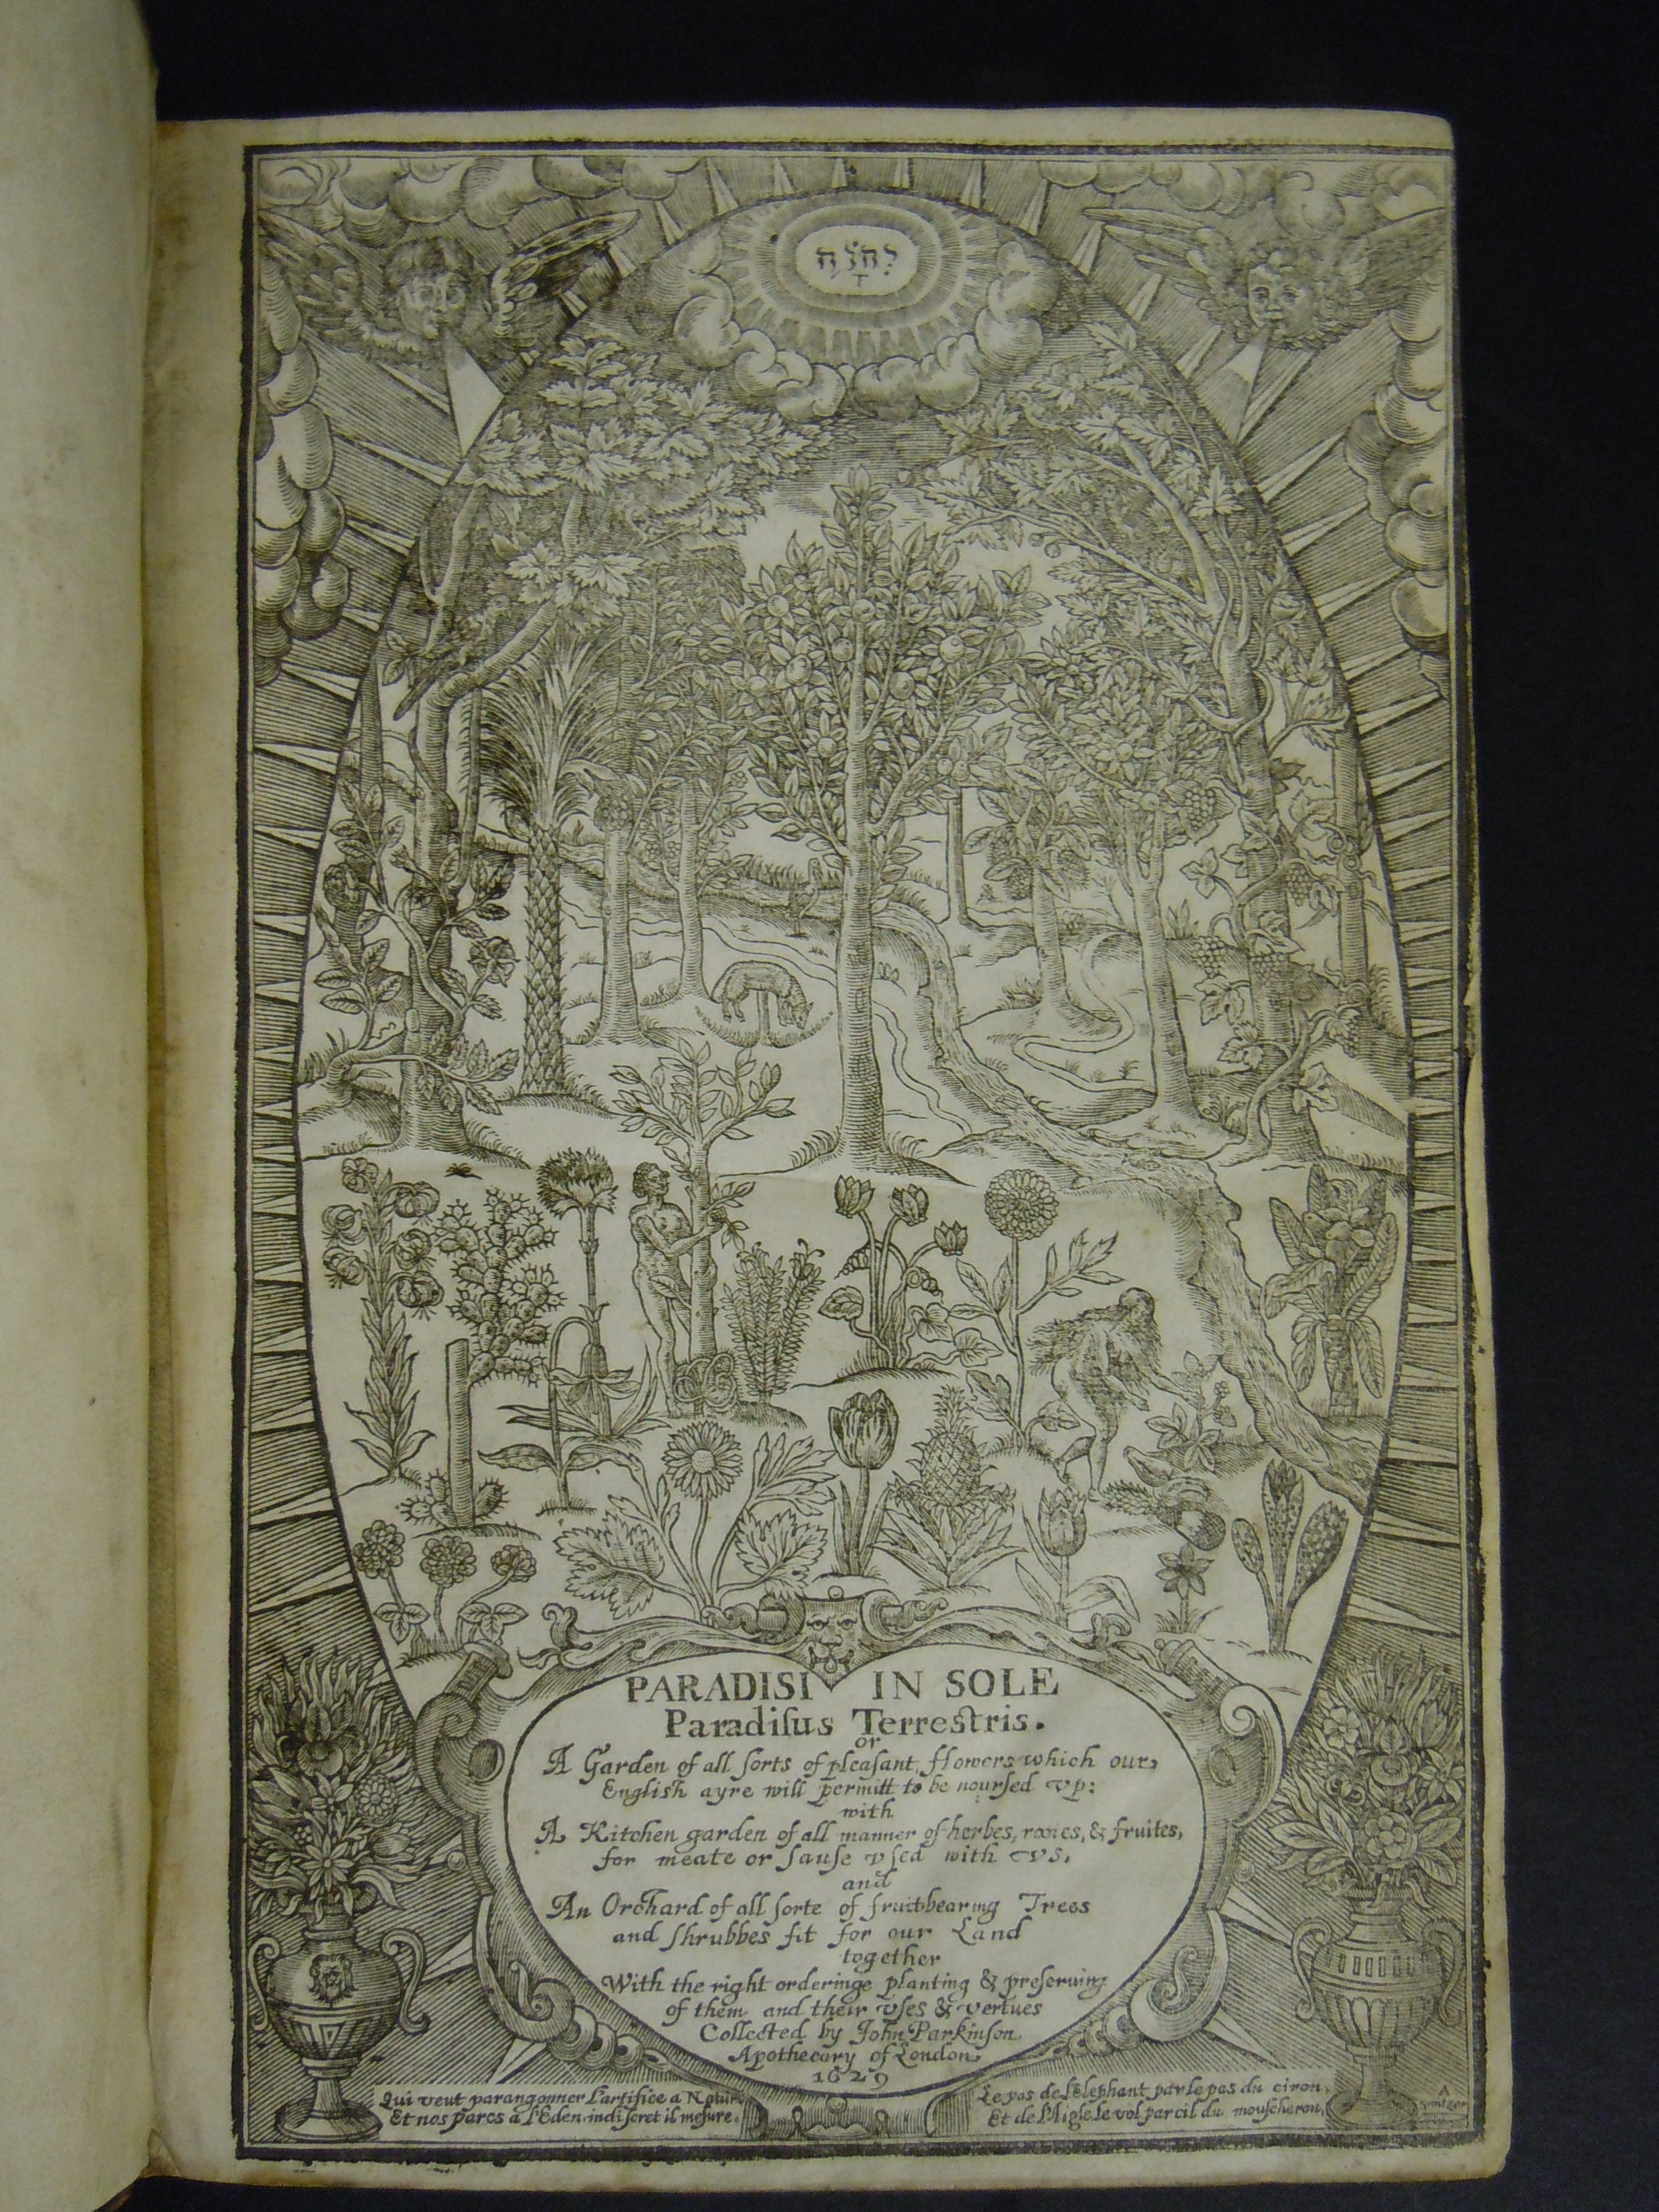 BT1.31.13, title page, John Parkinson’s Paradisi in sole paradisus terrestris (1629)